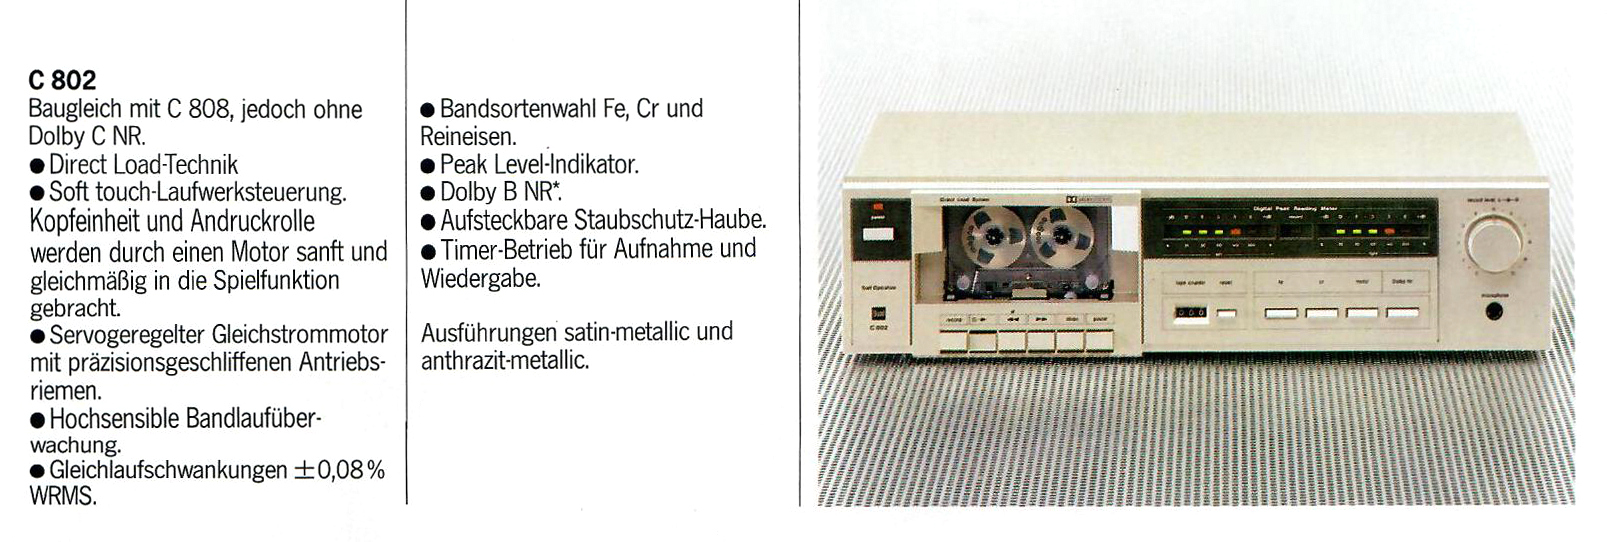 Dual C-802-Prospekt-1984.jpg